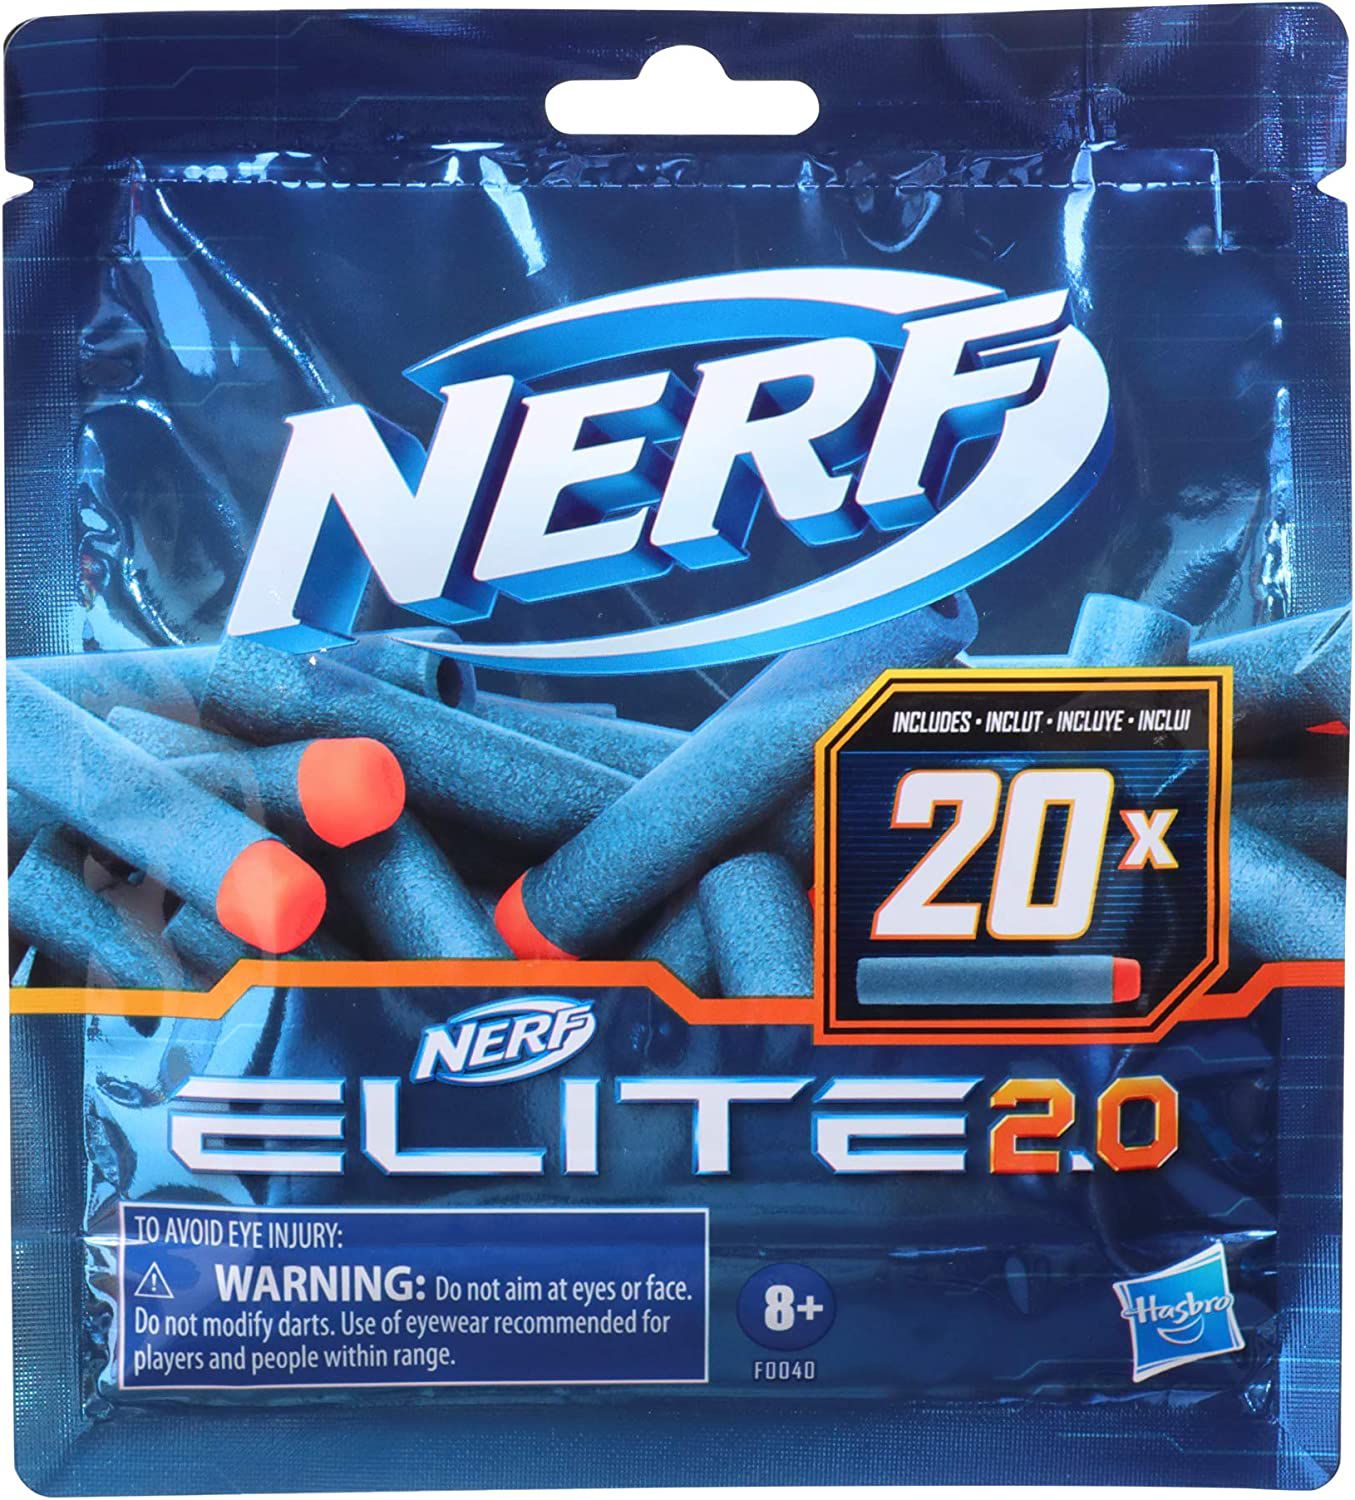 Lançador Dardos Nerf Elite Tetrad Qs-4 Hasbro F5026 Garantia